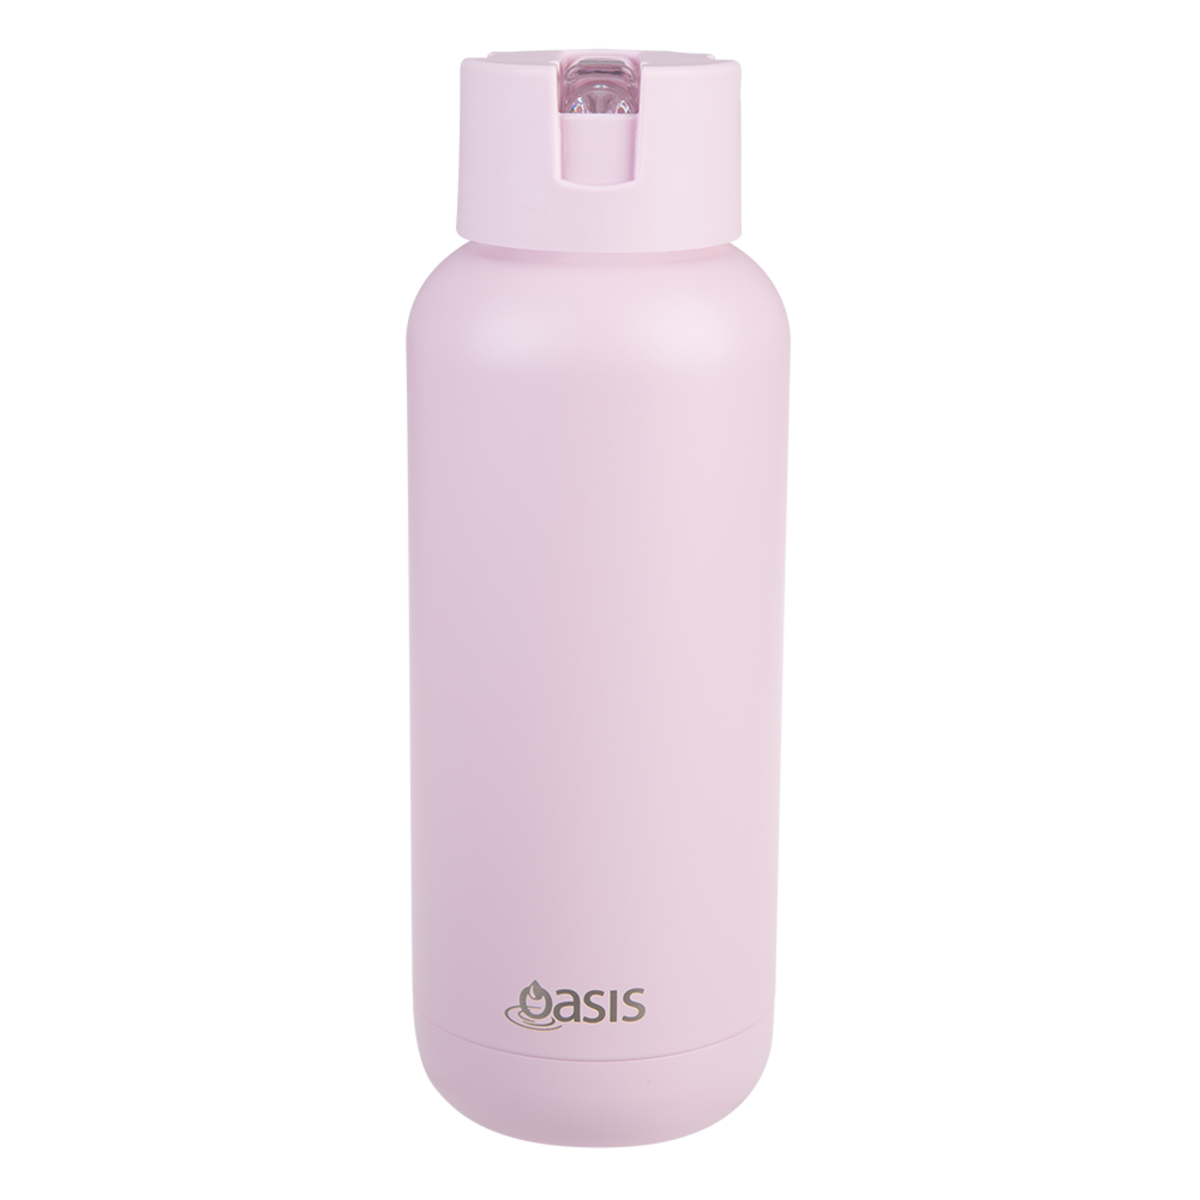 Oasis "moda" Ceramic Lined S/s Triple Wall Insulated Drink Bottle 1l - Pink Lemonade